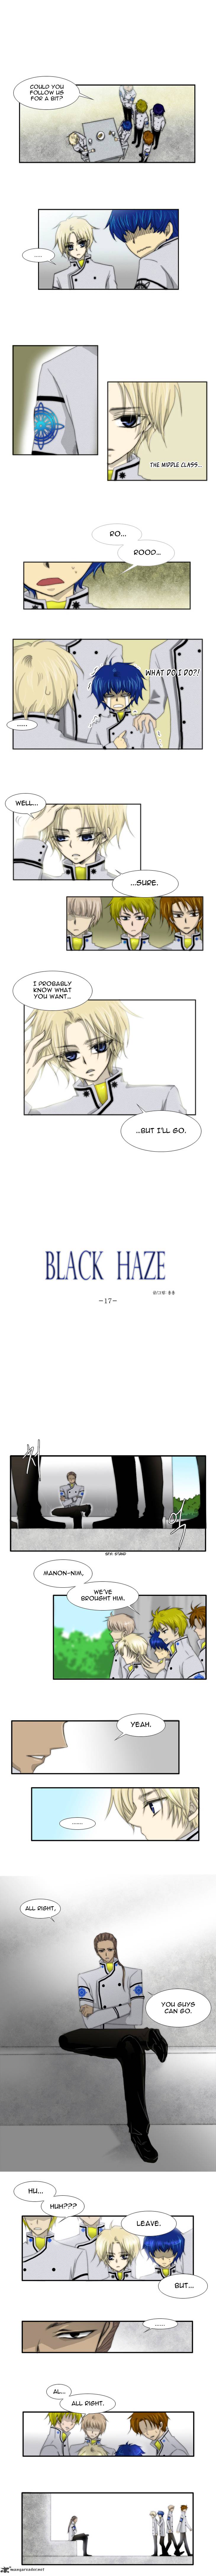 Black Haze Chapter 17 Page 1